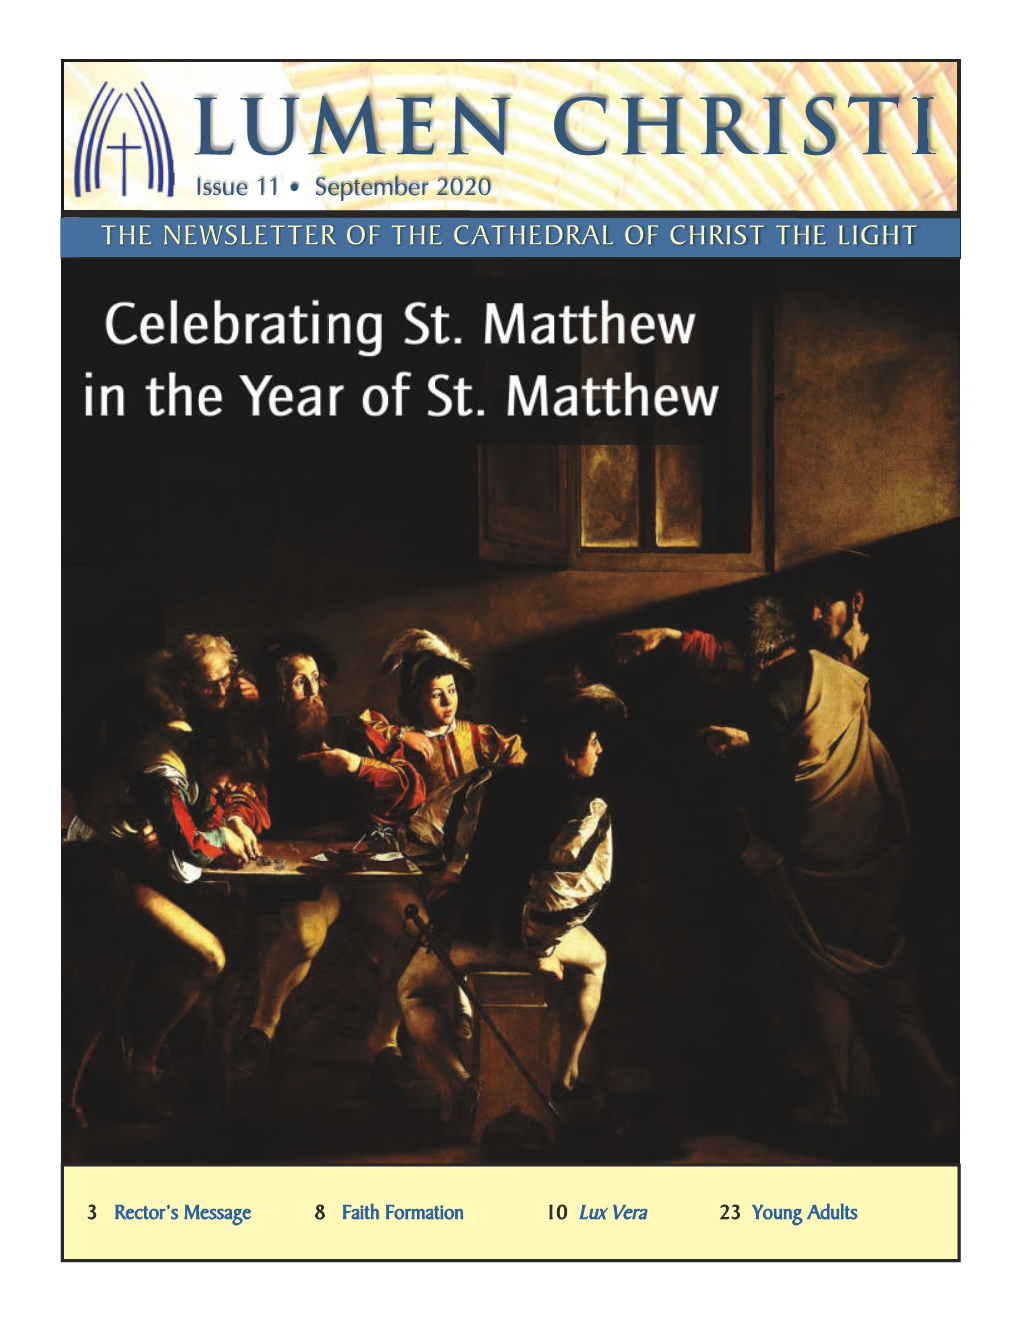 LUMEN CHRISTI Issue 111 • Septemberp 202020 the NEWSLETTER of the CATHEDRAL of CHRIST the LIGHTT